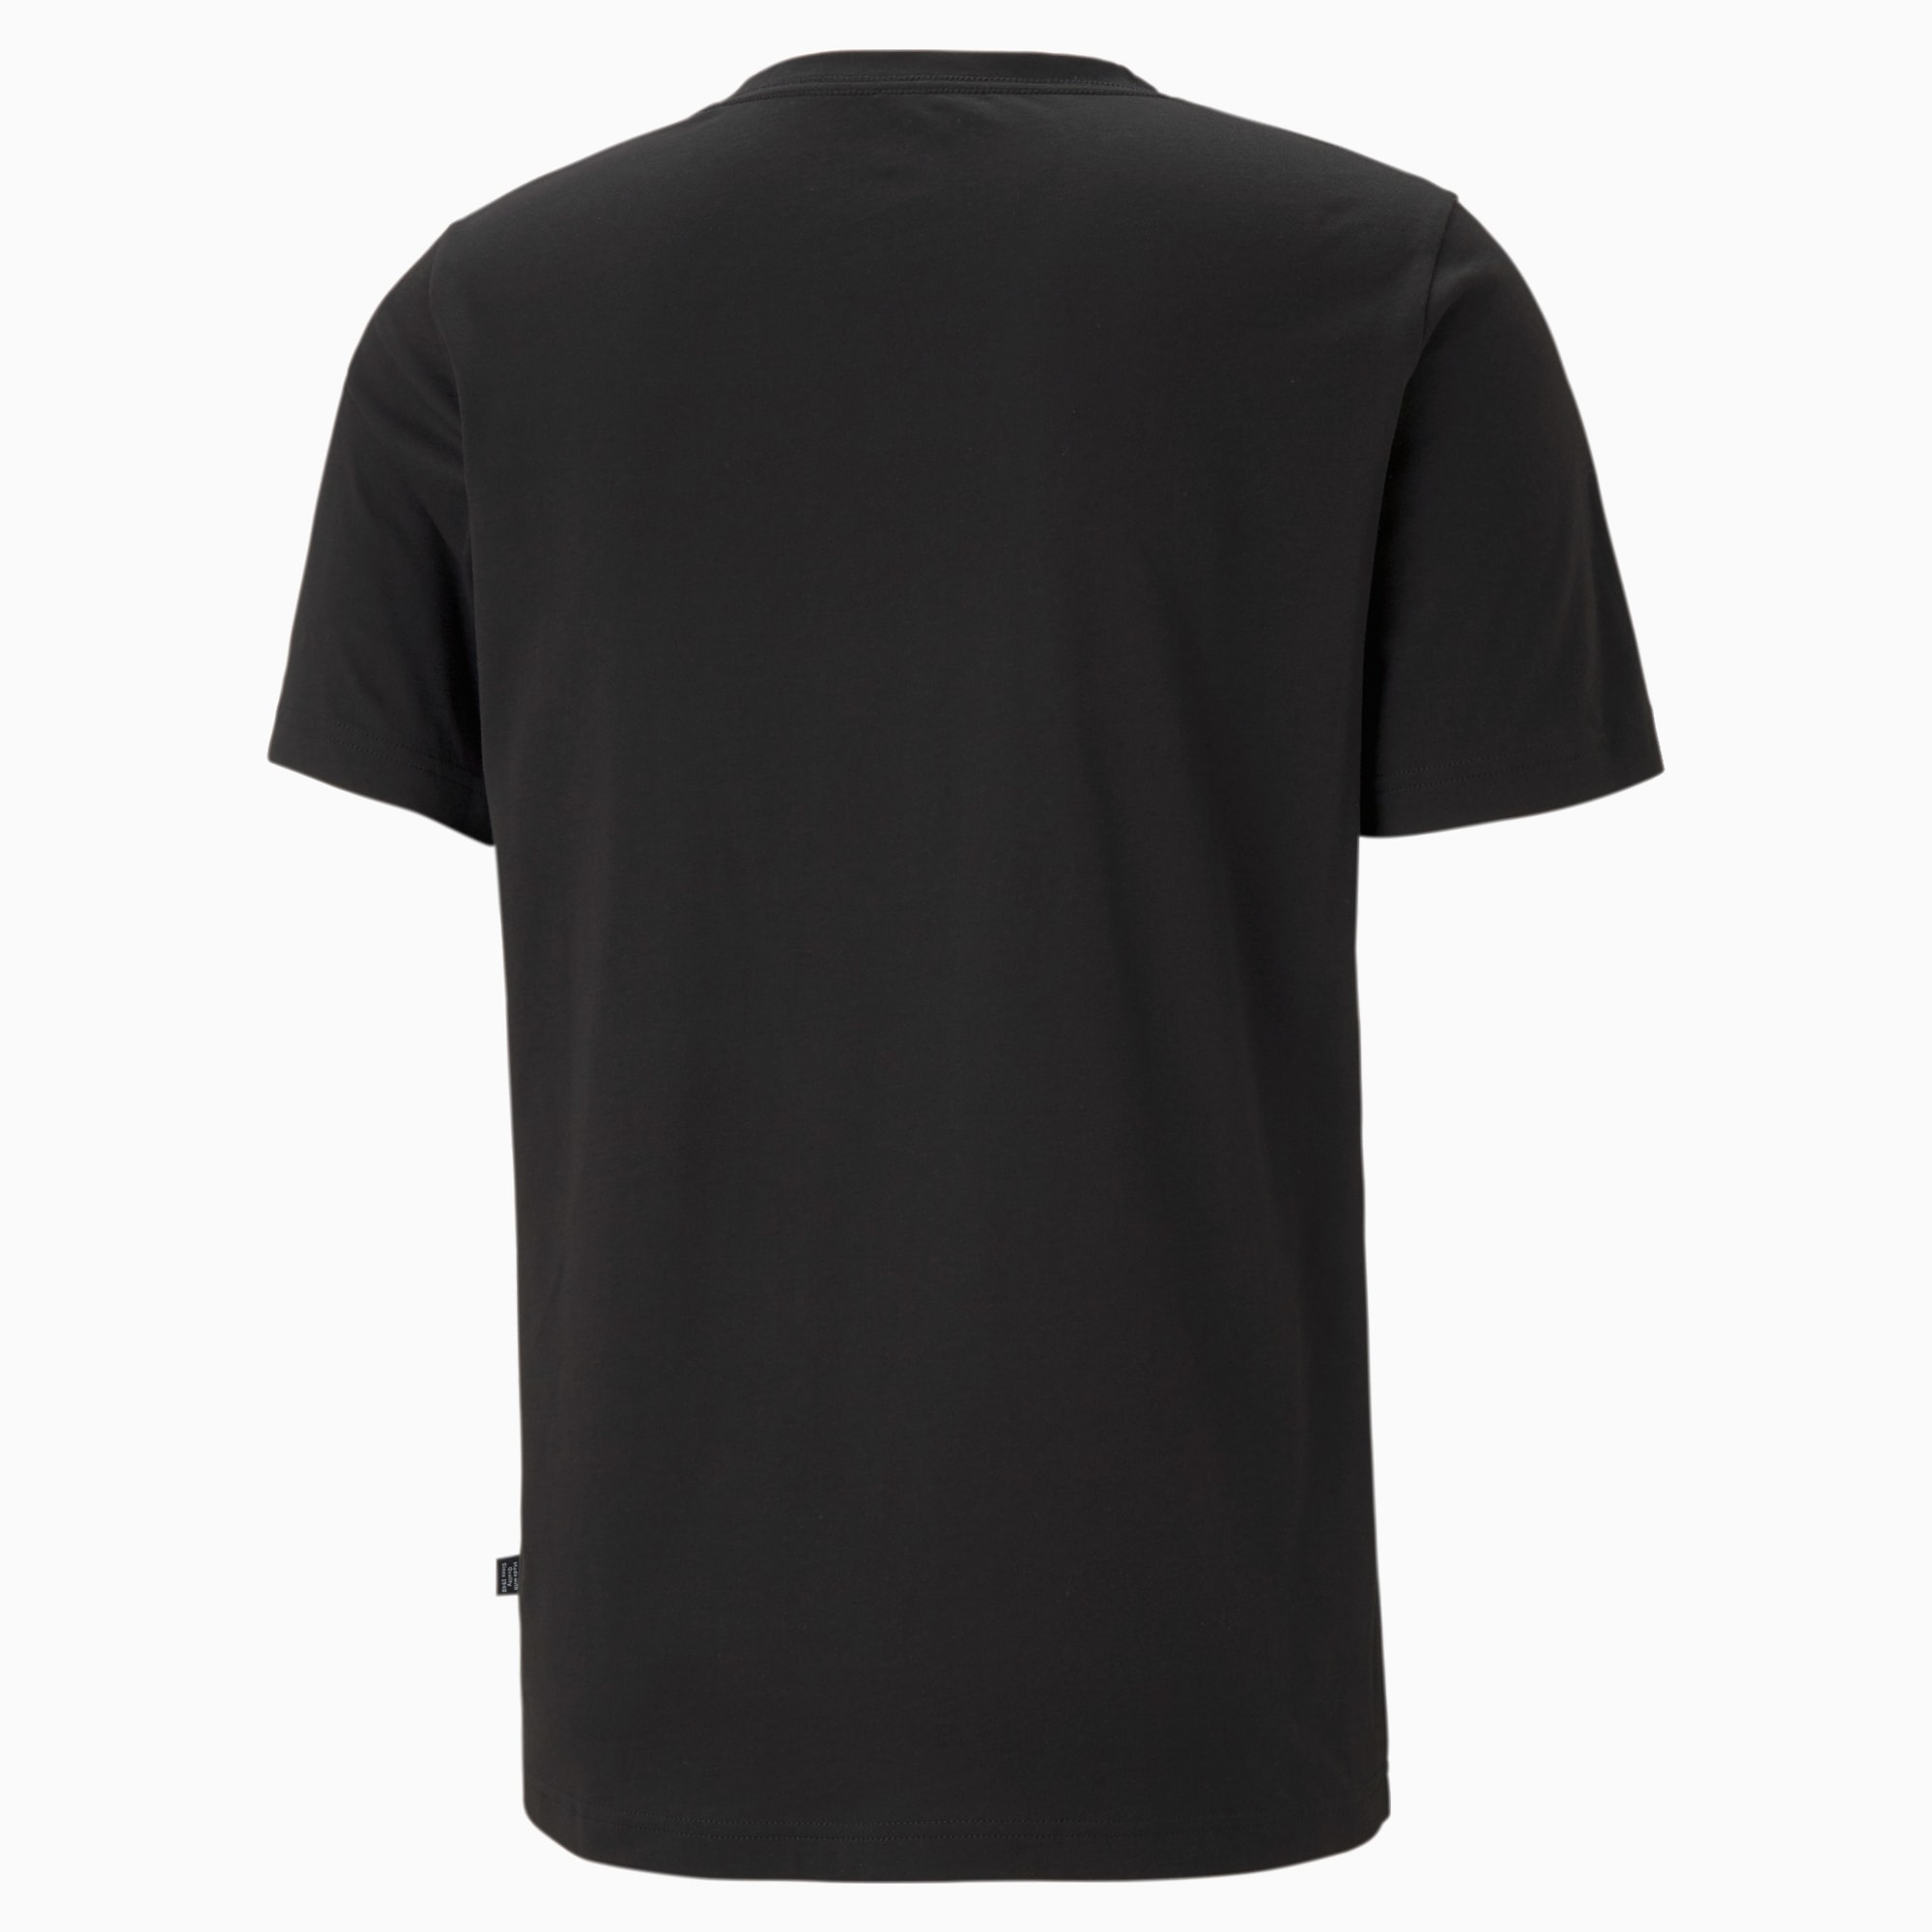 PUMA Essentials V-Neck T-Shirt Men, Black, Size S, Clothing